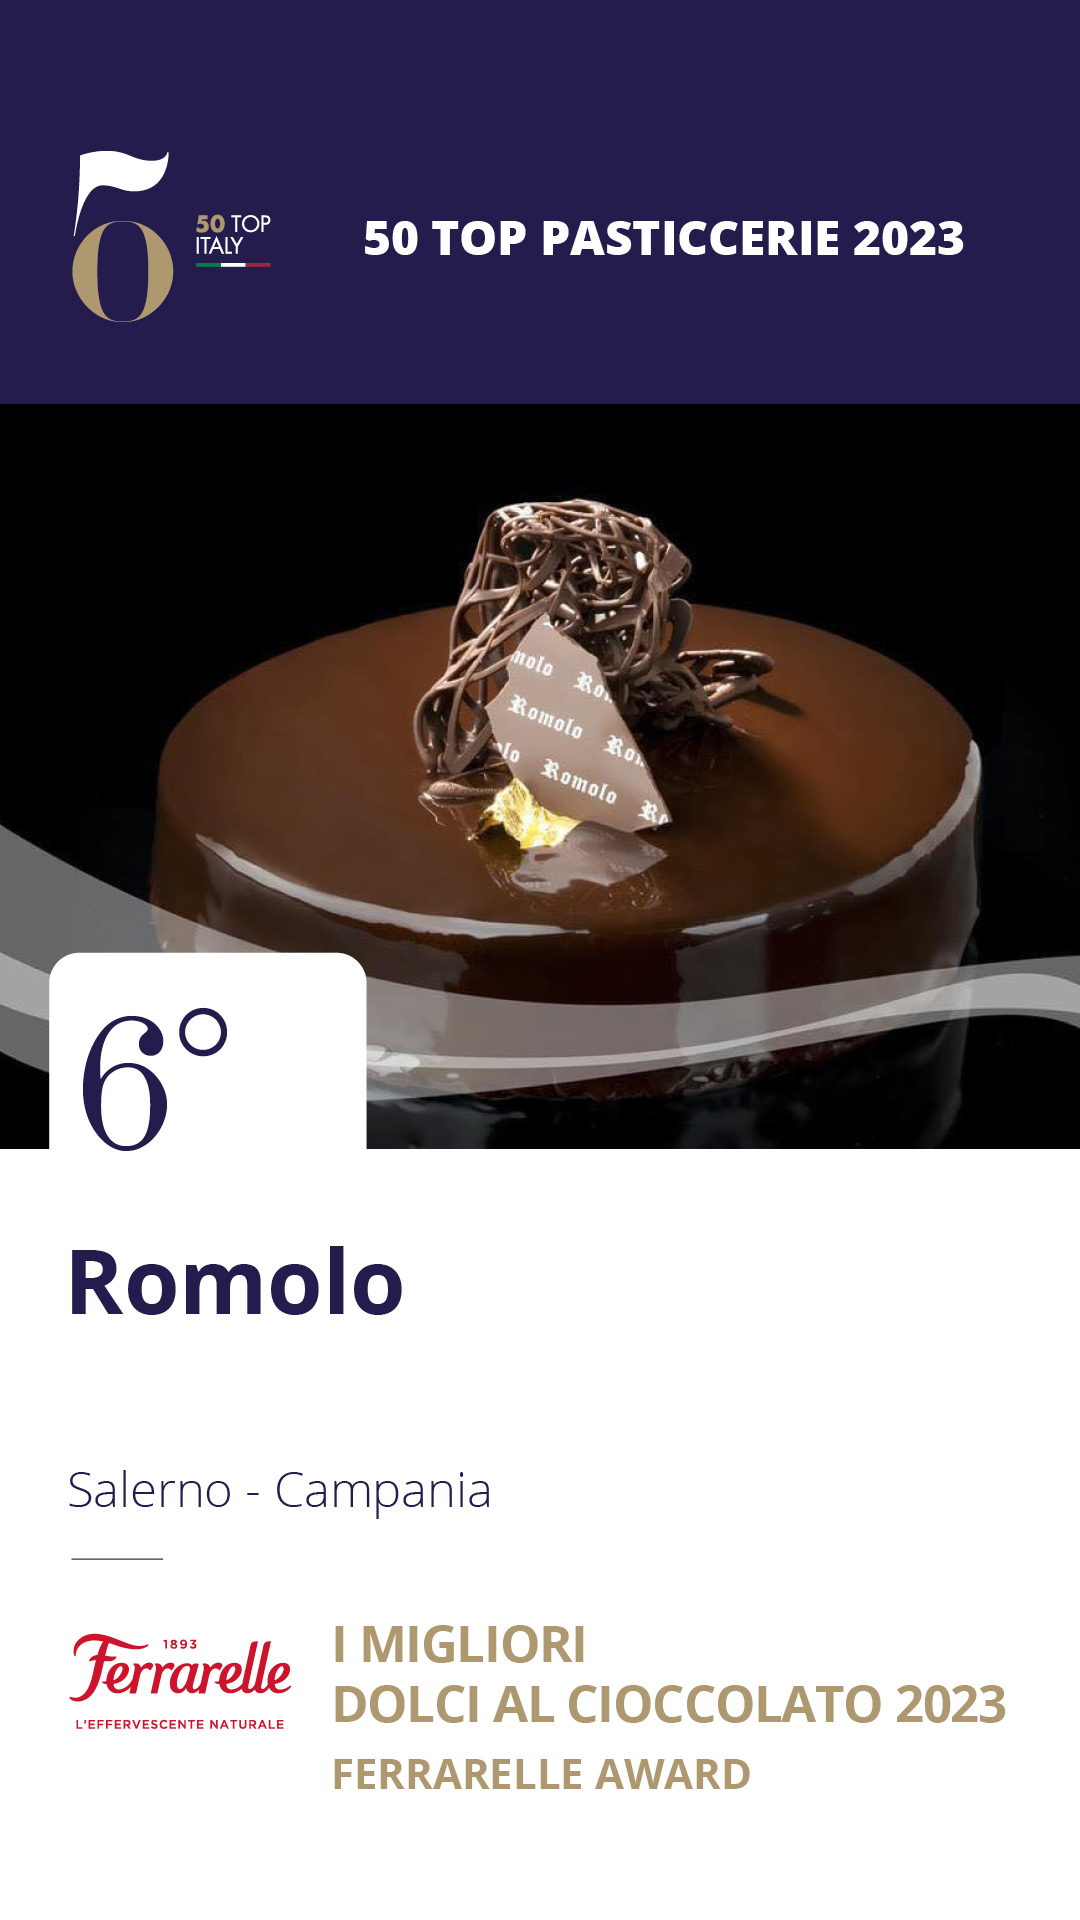 6. Romolo – Salerno, Campania